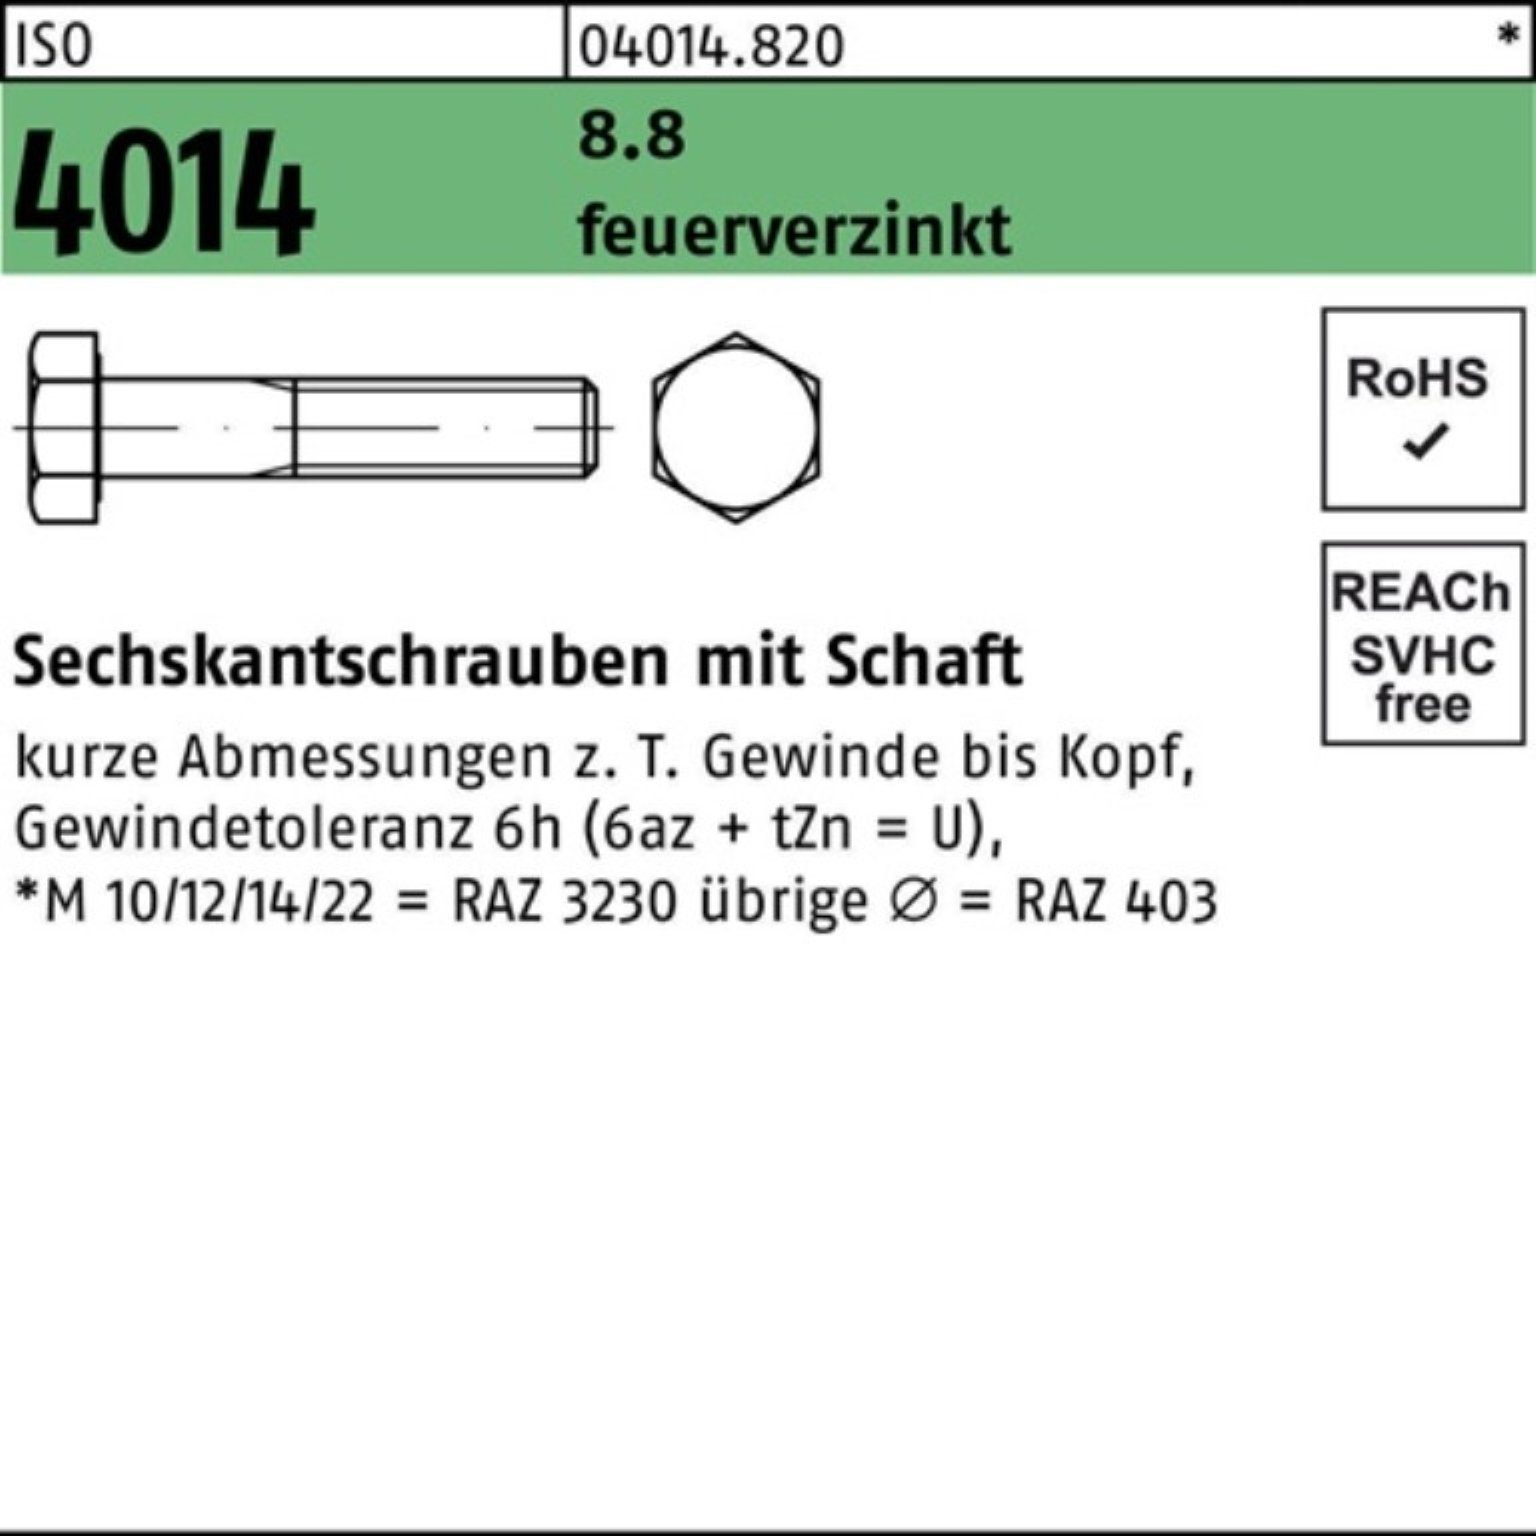 Bufab Sechskantschraube 100er Pack Sechskantschraube ISO 4014 Schaft M24x 130 8.8 feuerverz. 1 | Schrauben